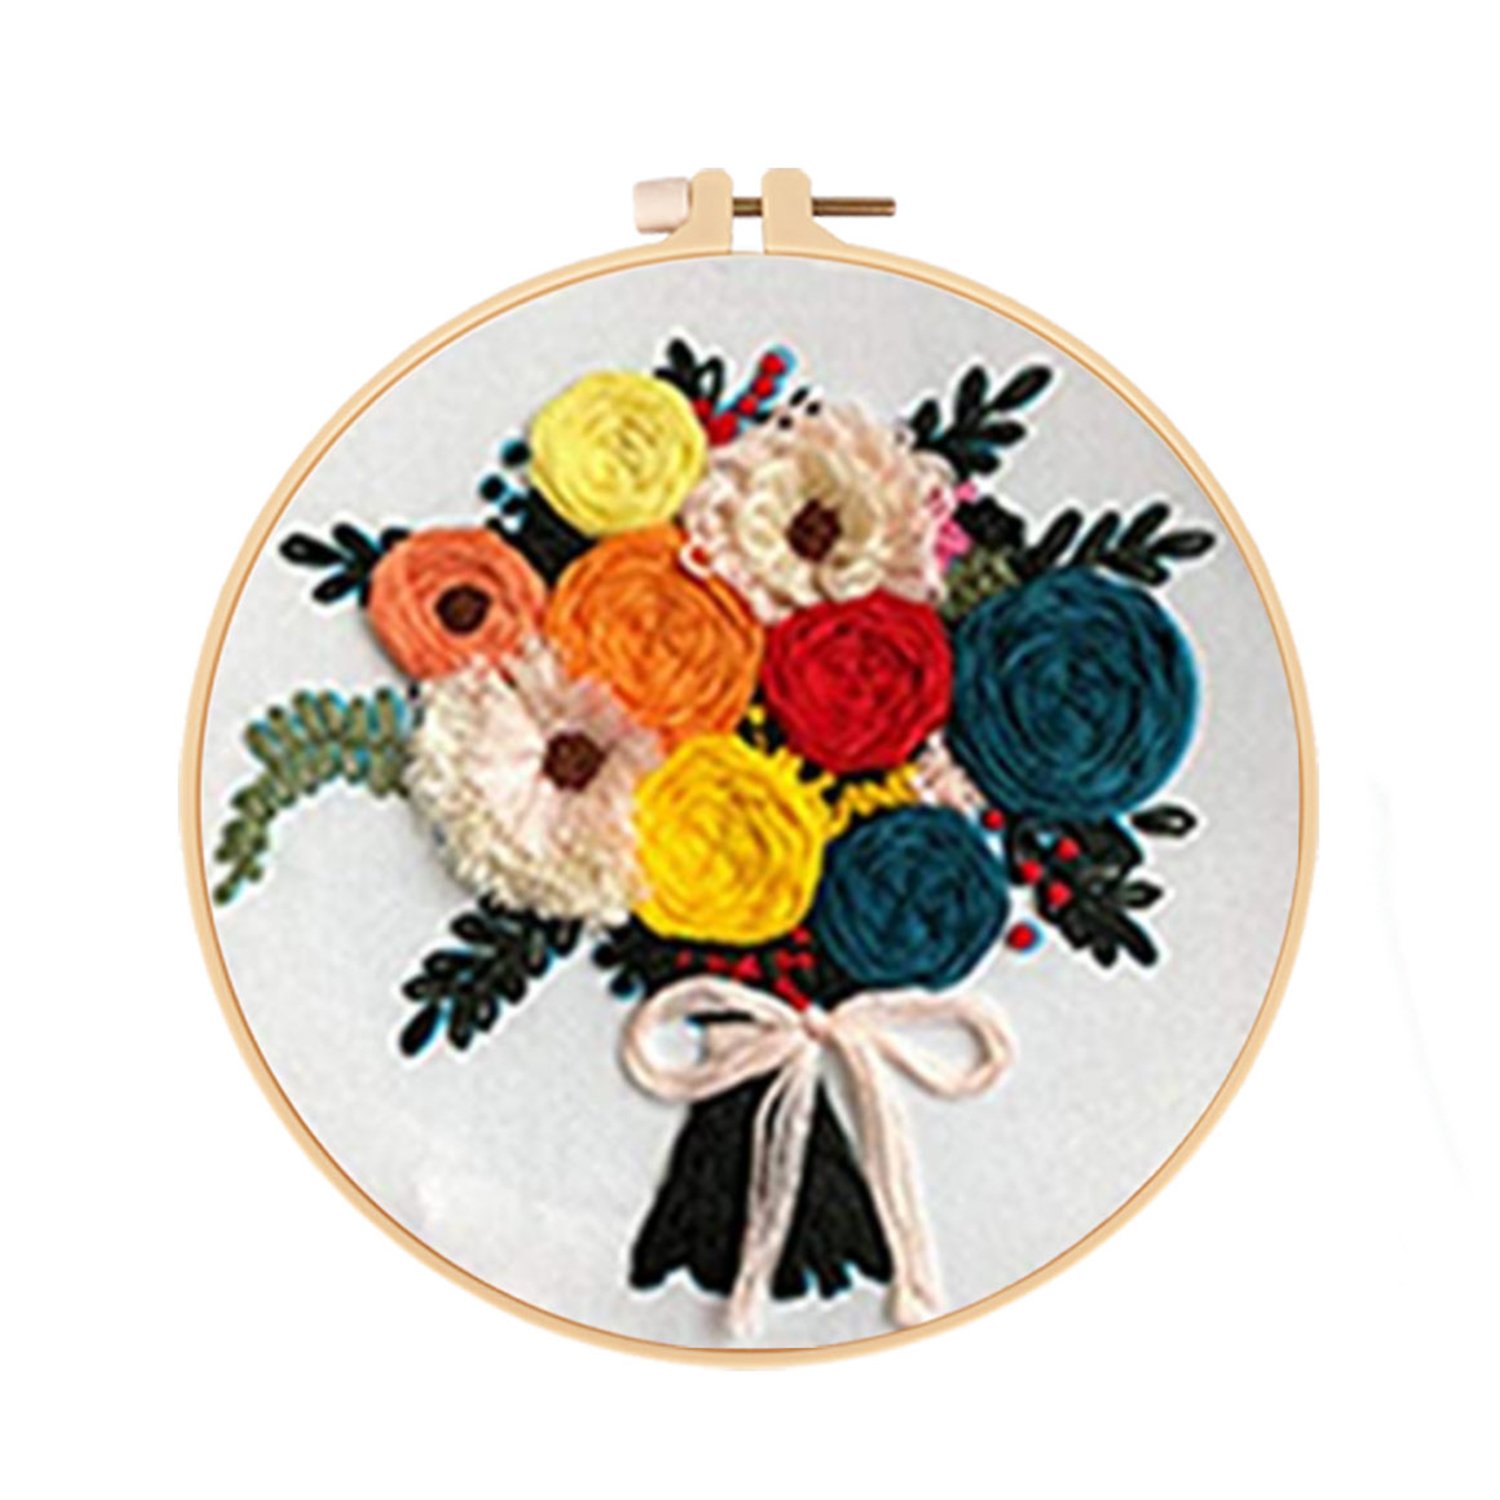 Beginners-Handmade Kits Cross stitch kit for Adults Kids Adult - Flower Series Pattern